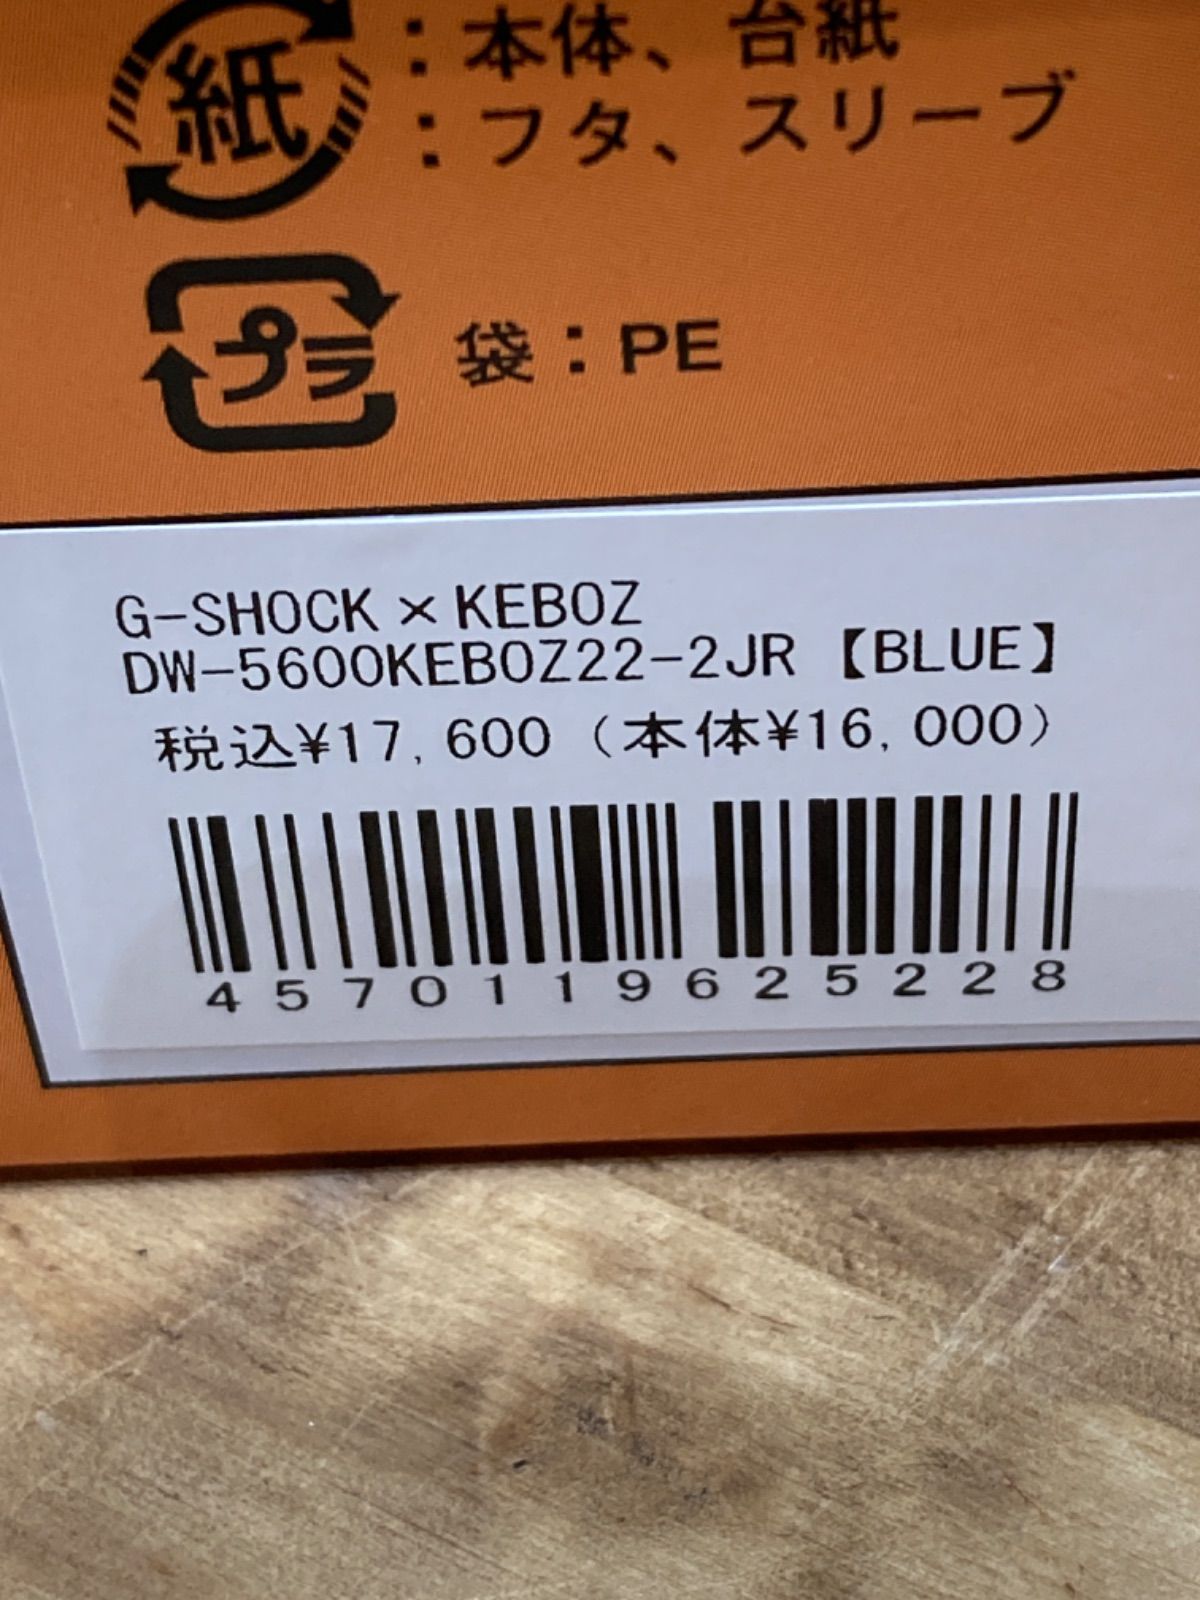 79 G-SHOCK KEBOZ DW-5600KEBOZ22 - ノッカーランド 加賀店 - メルカリ